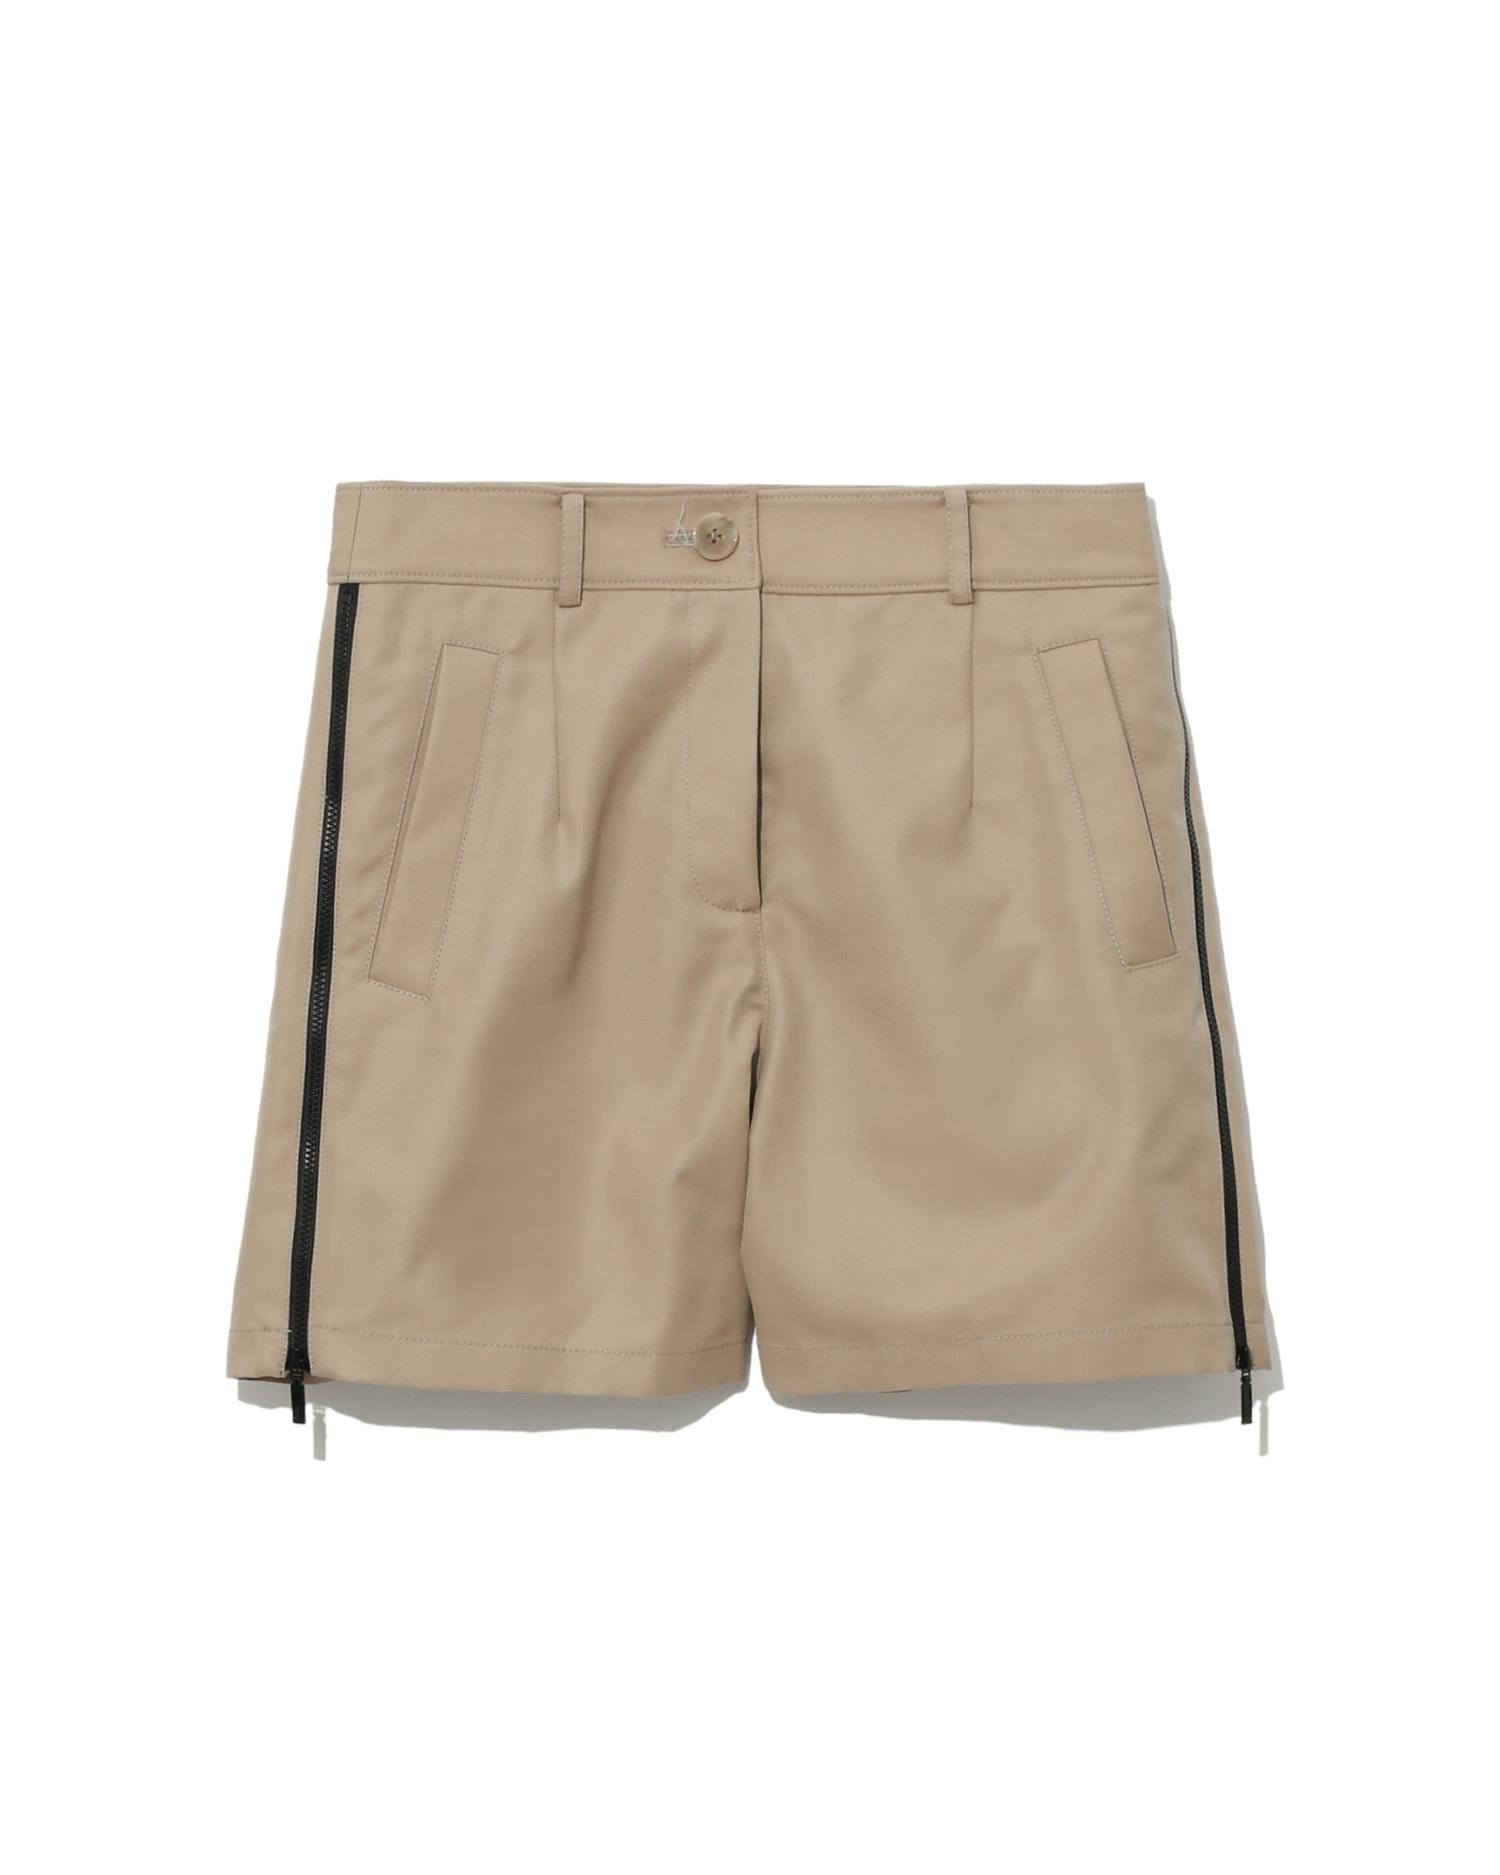 Zipper shorts by BESFXXK